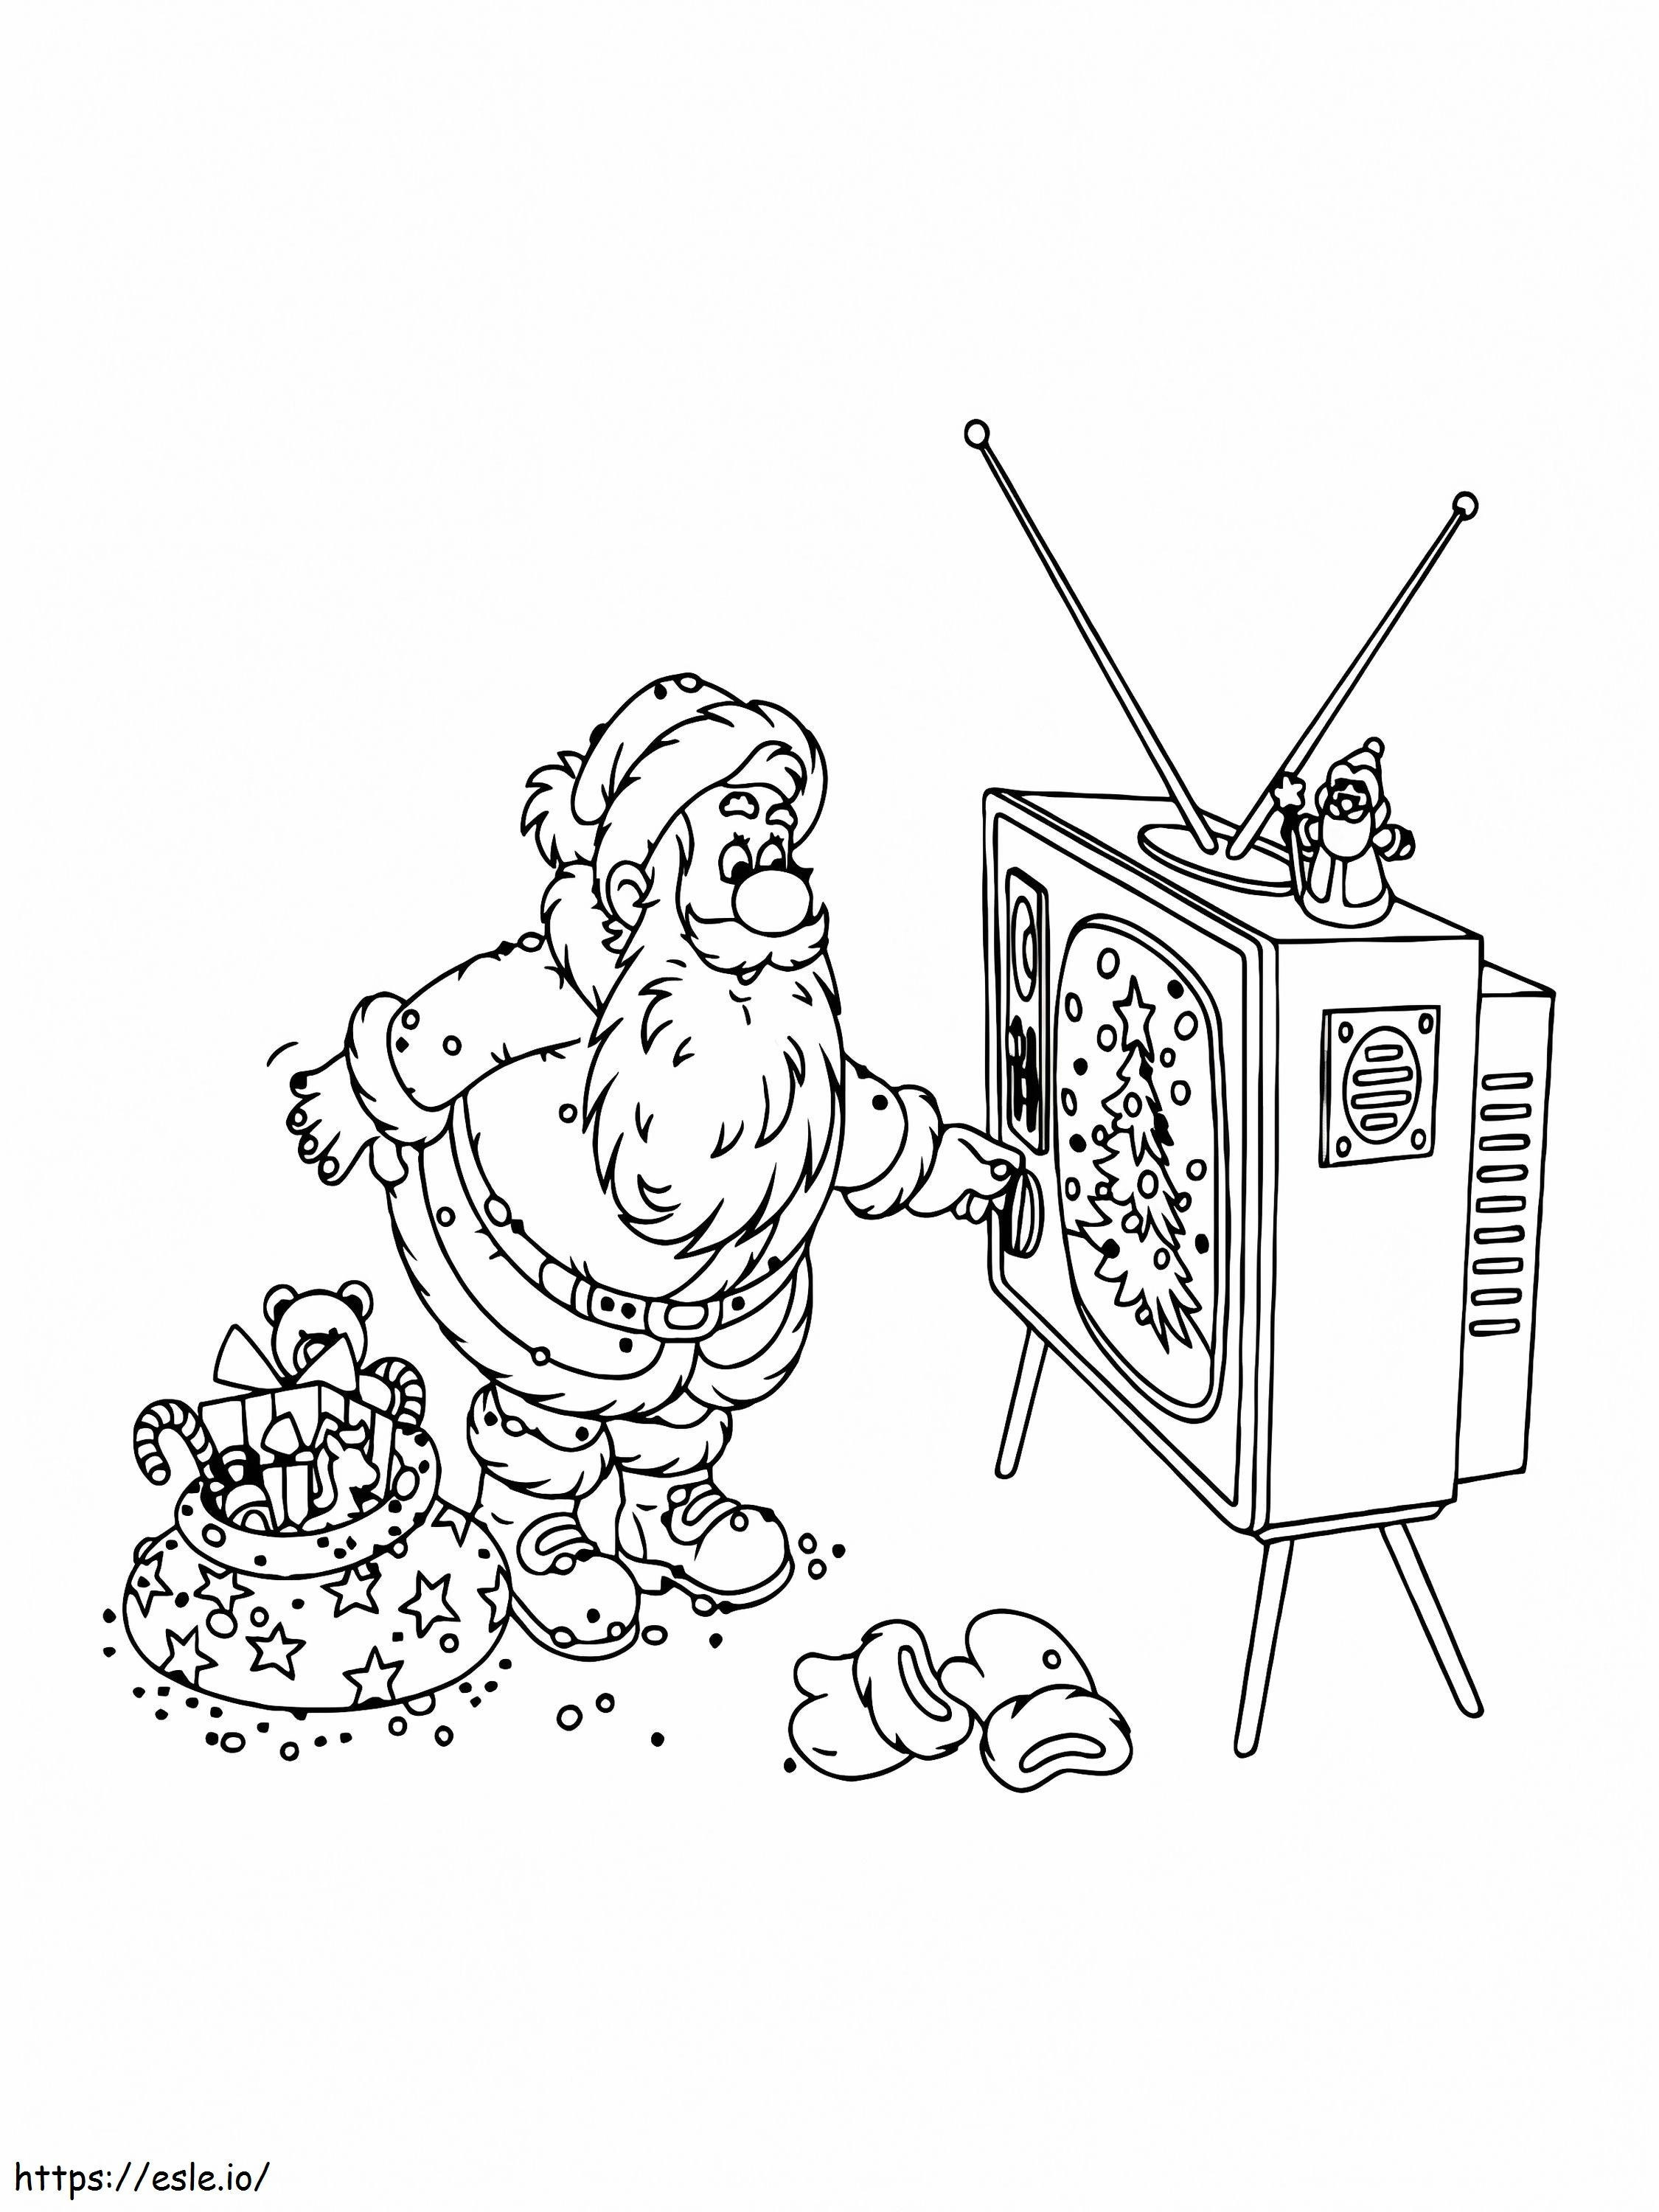 Noel Baba TV izliyor boyama